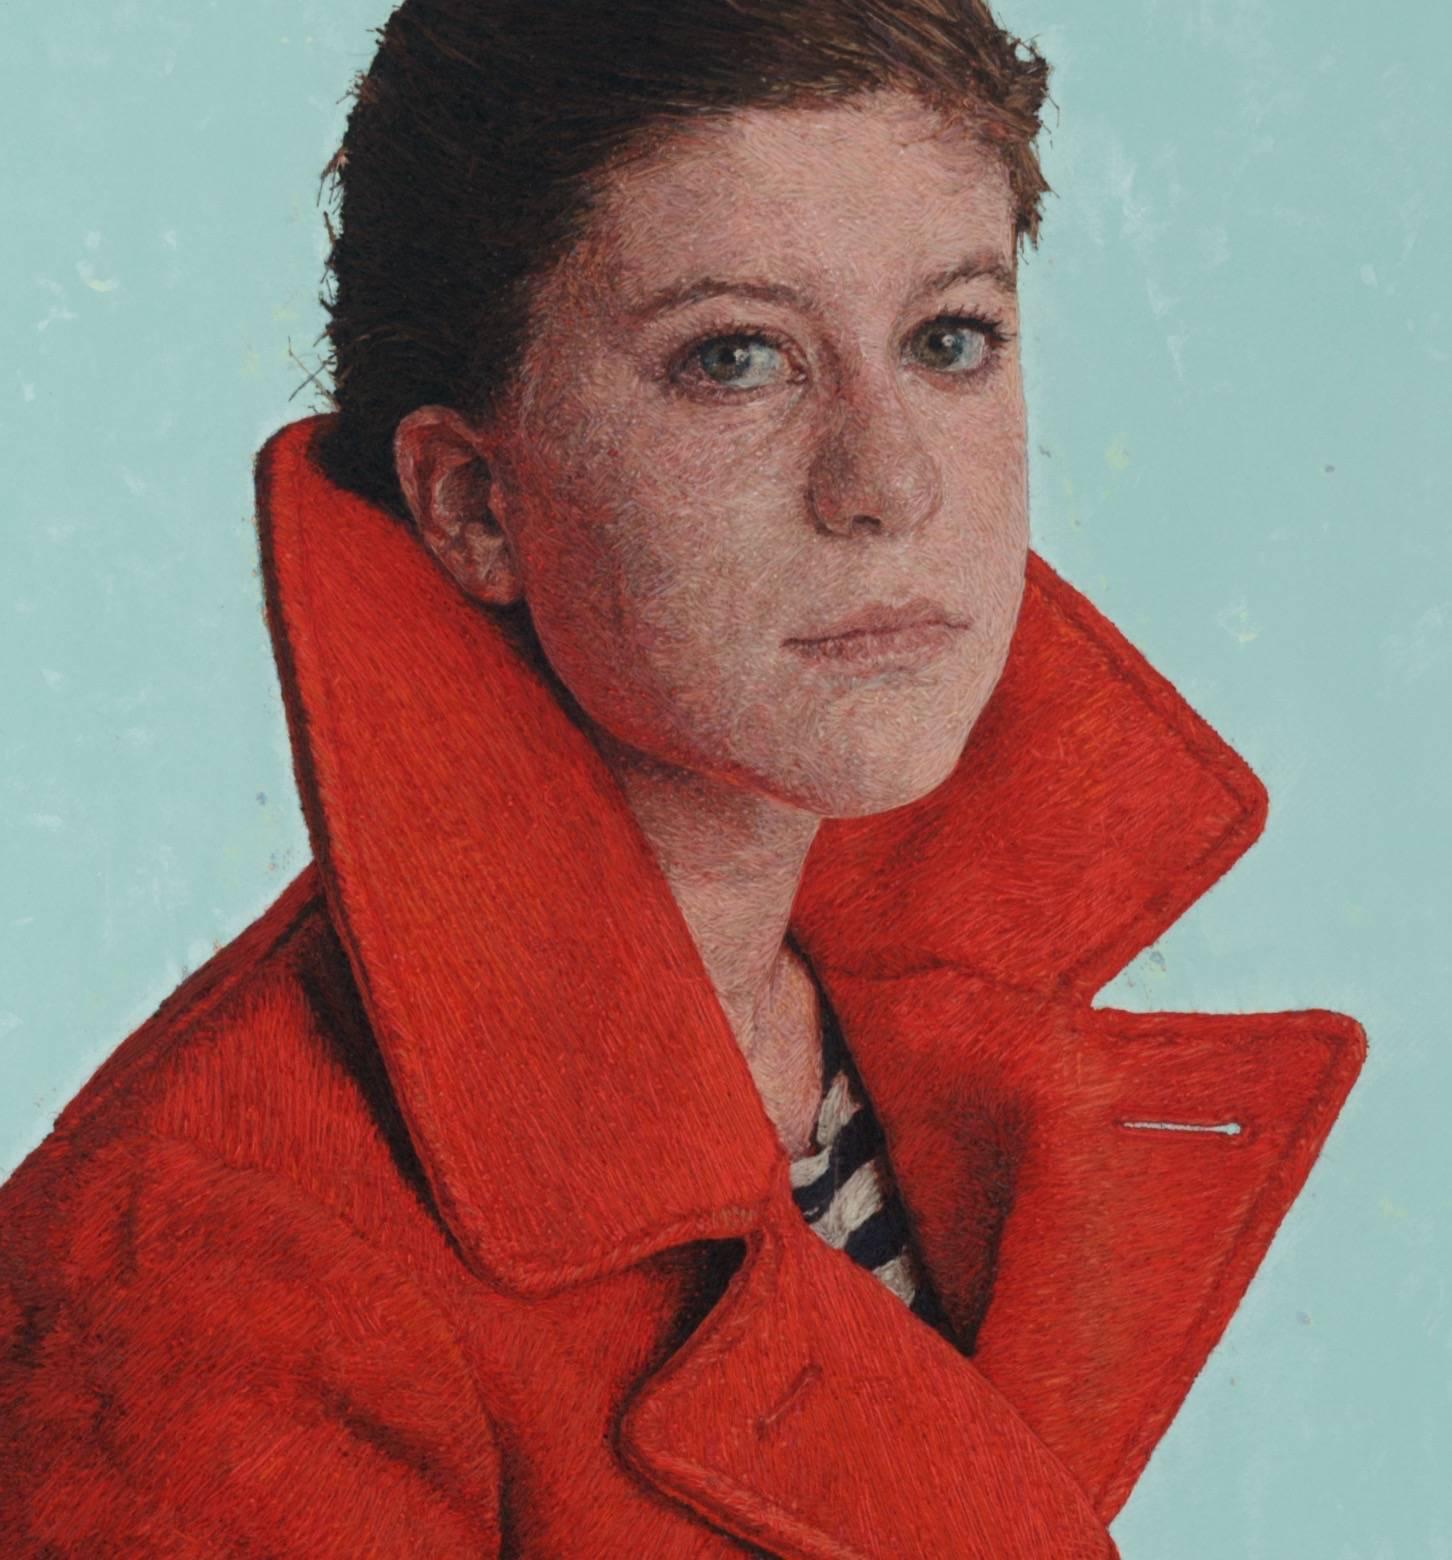 Raphaella in Her Winter Coat (After Alex) - Contemporary Art by Cayce Zavaglia